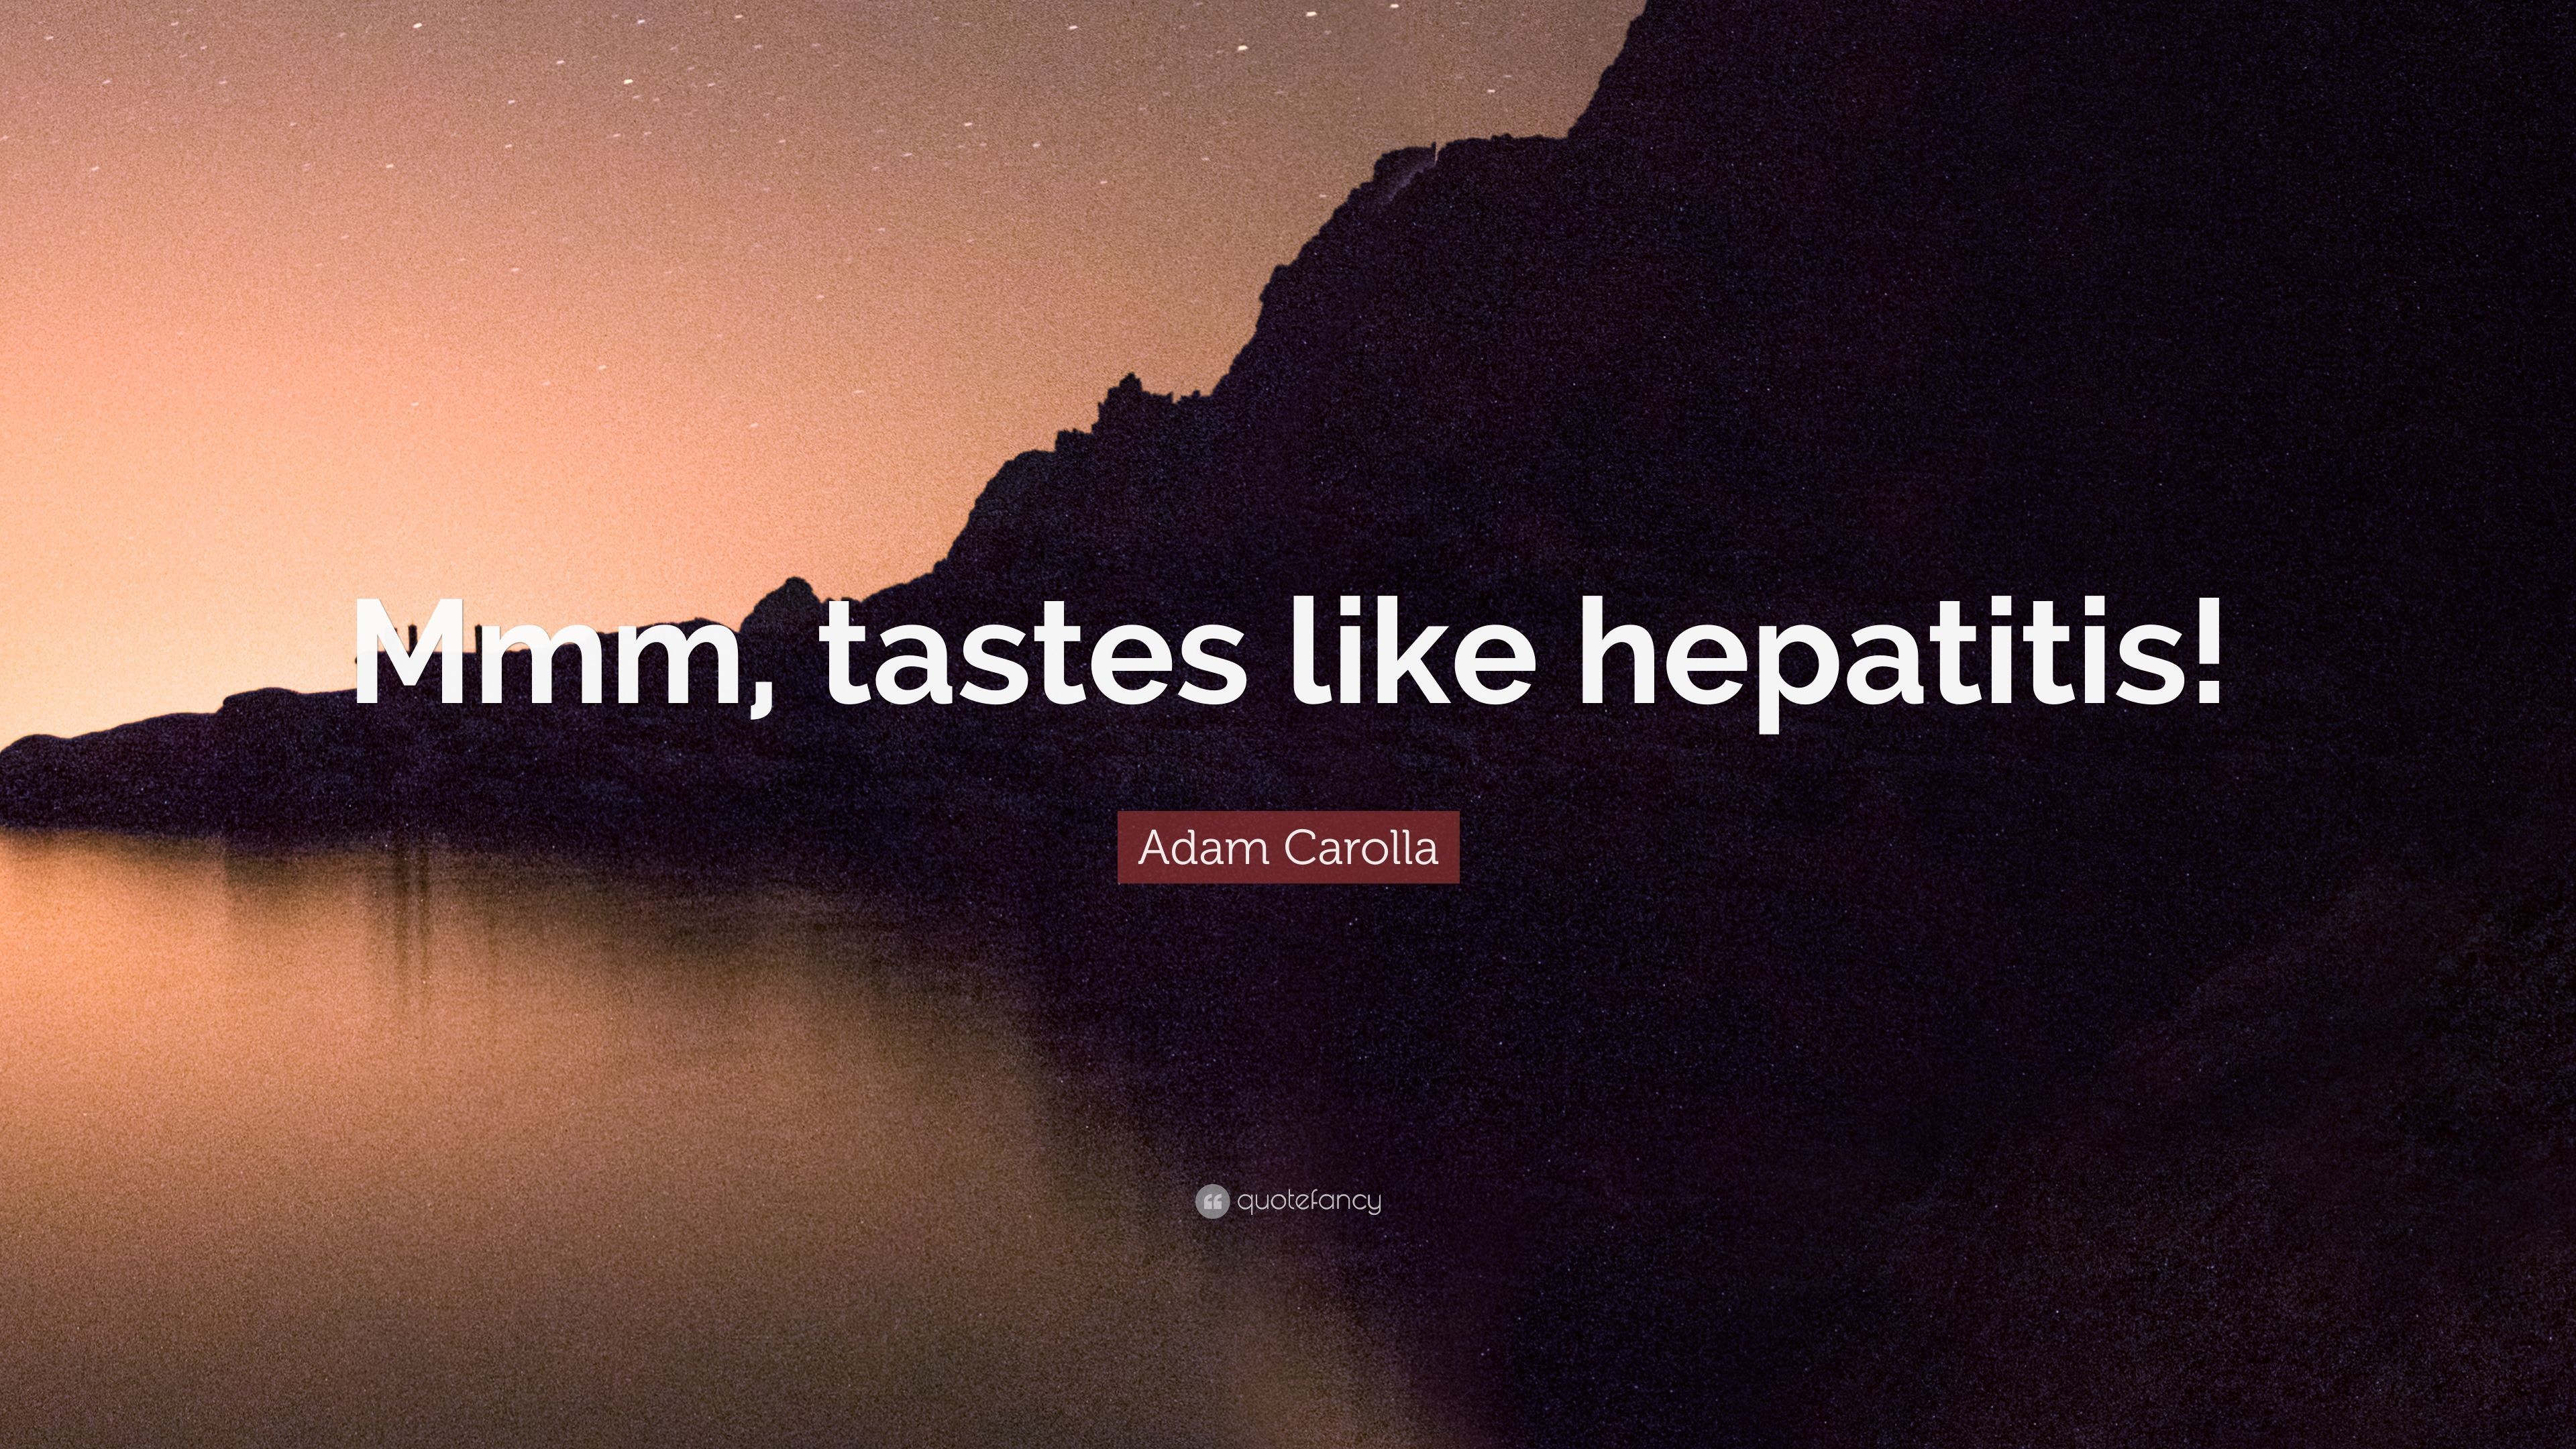 Adam Carolla Quote: “Mmm, tastes like hepatitis!” 7 wallpaper